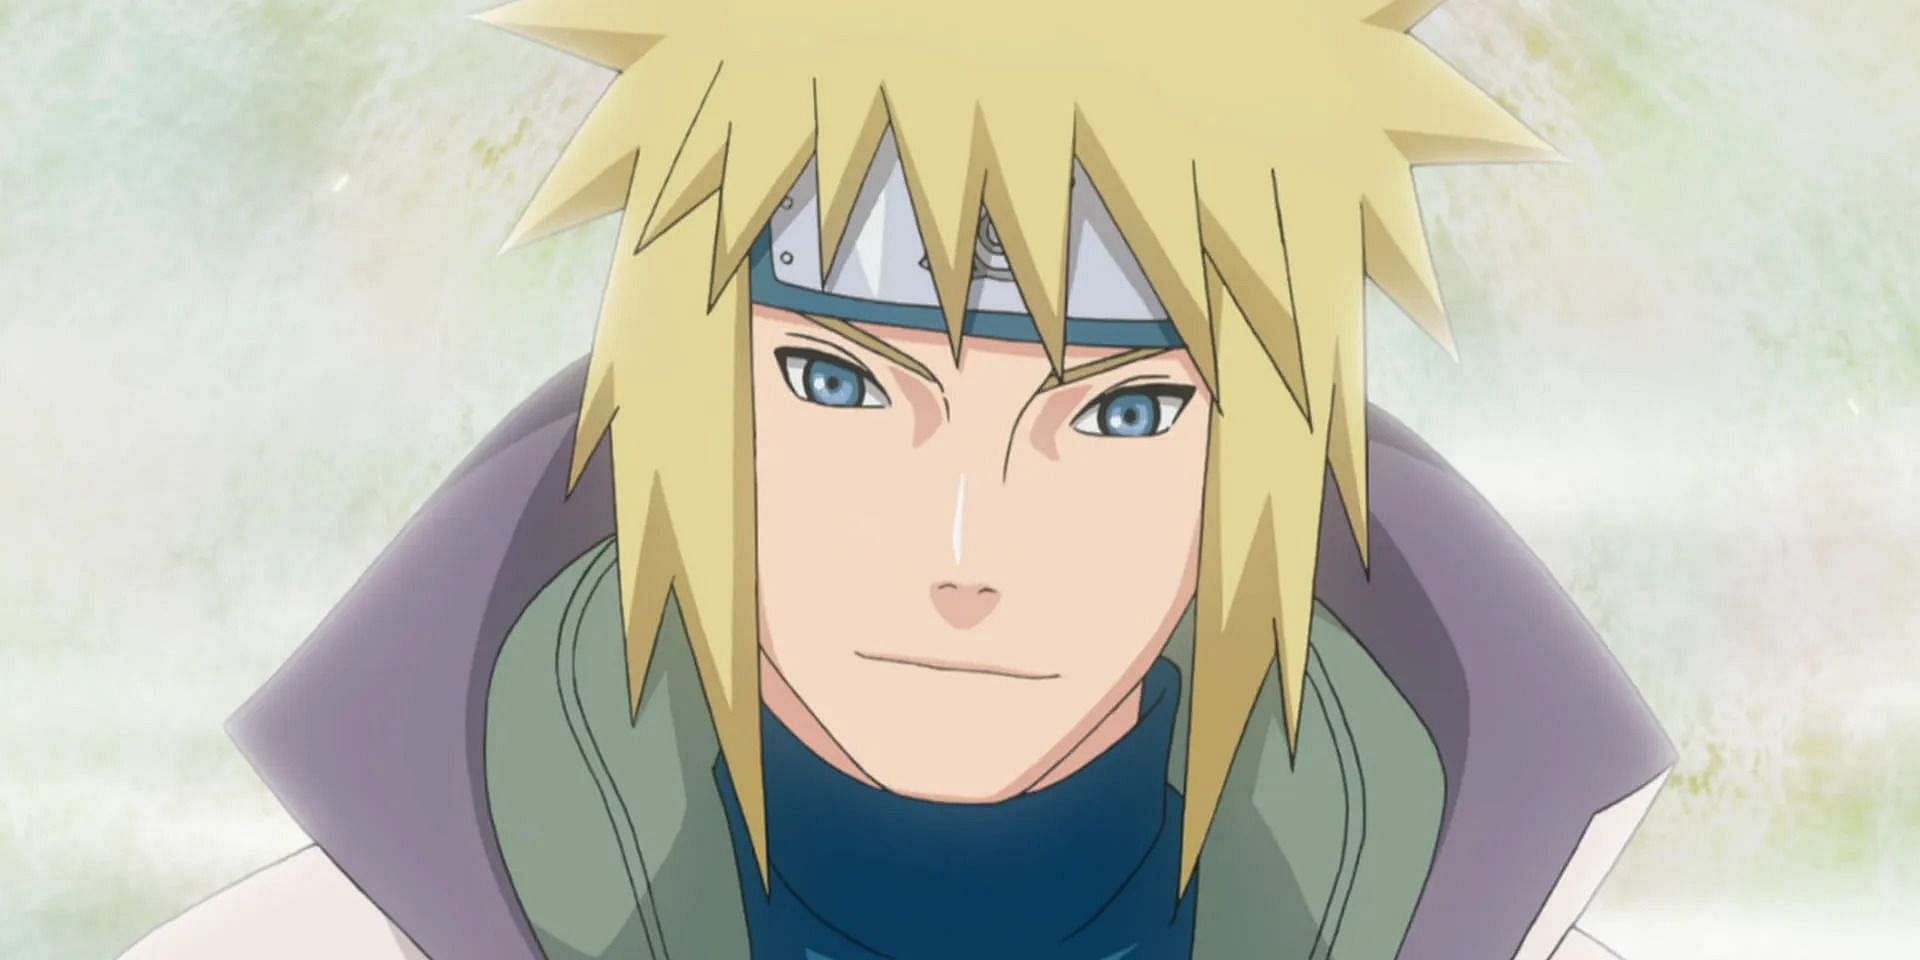 Minato as seen in Naruto Shippuden (Image via Studio Pierrot)